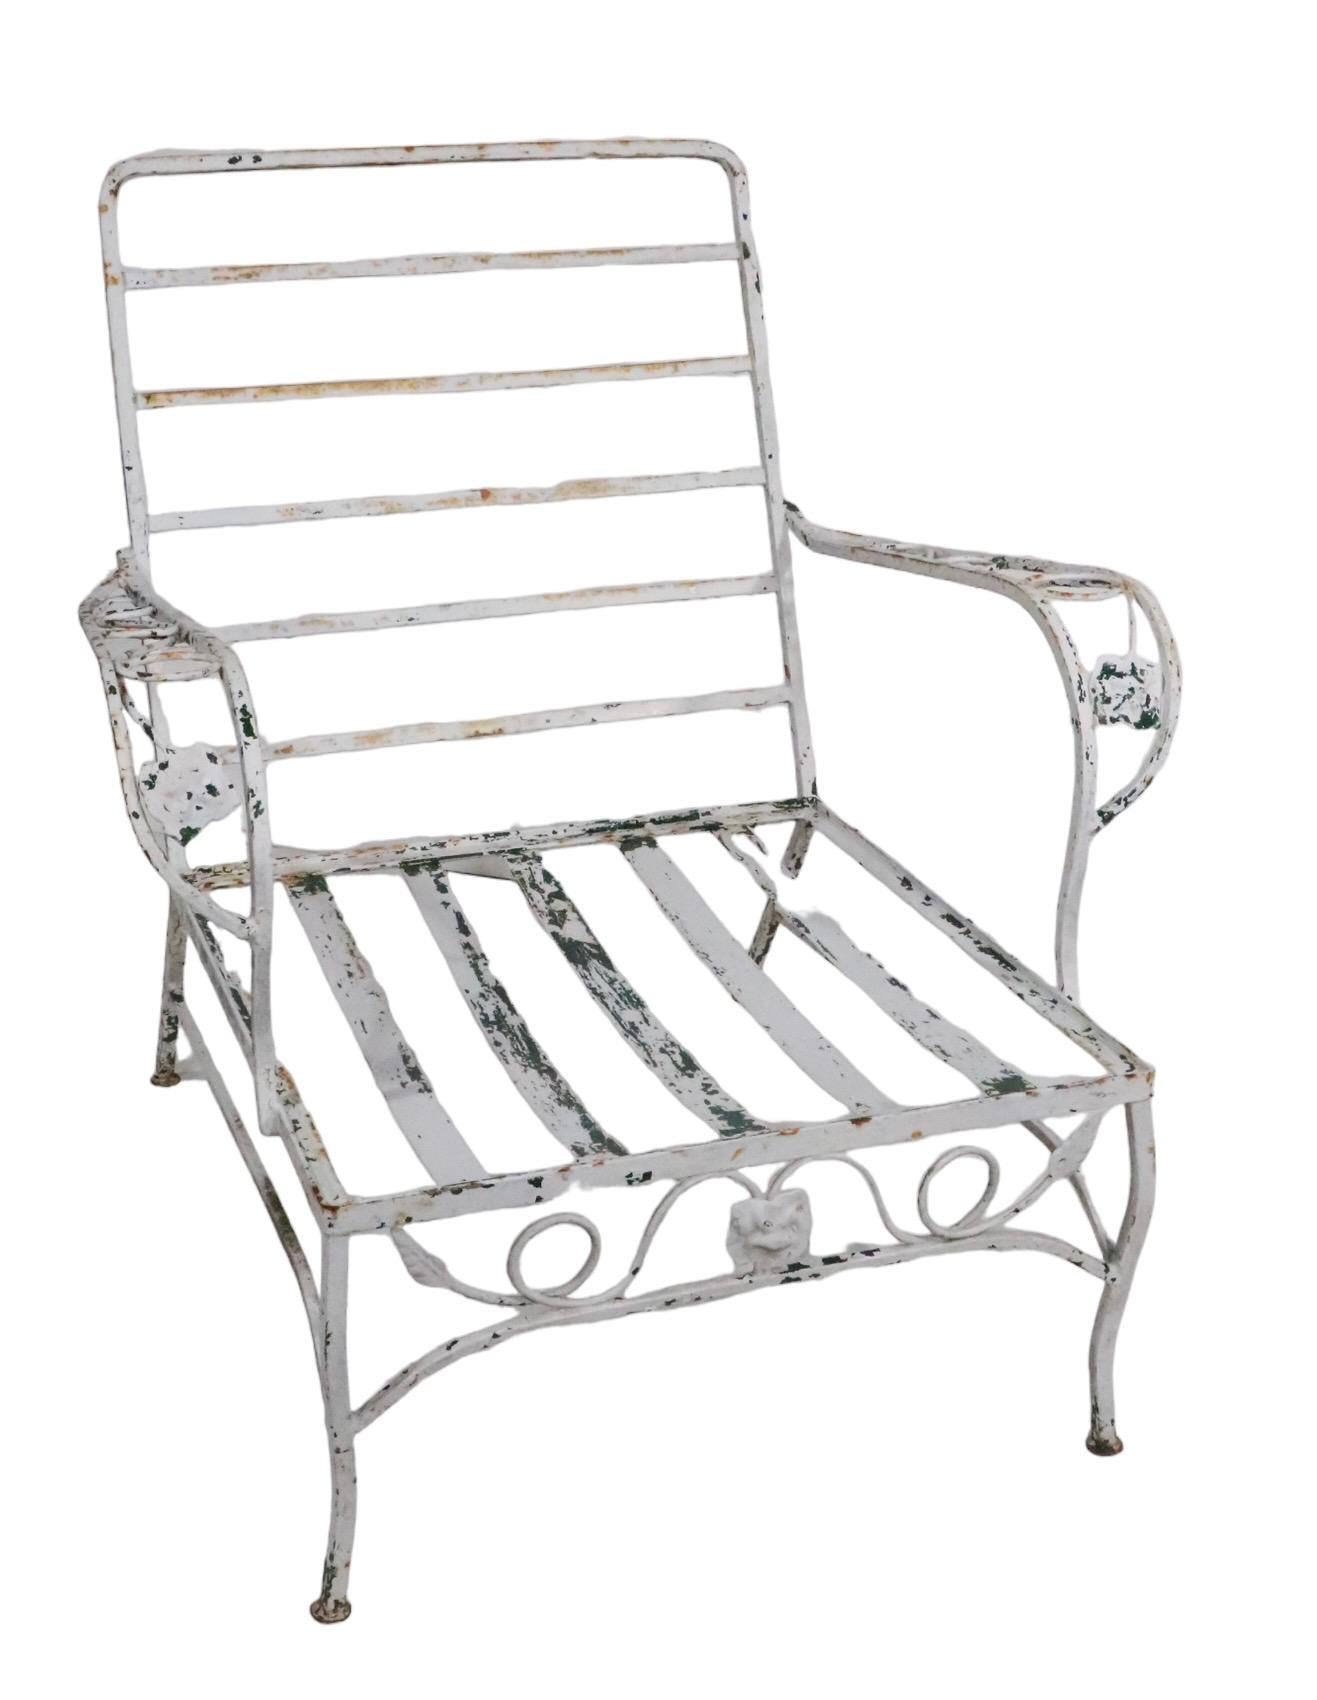 20th Century Wrought Iron Garden Patio Poolside Lounge Chair att. to Salterini  For Sale